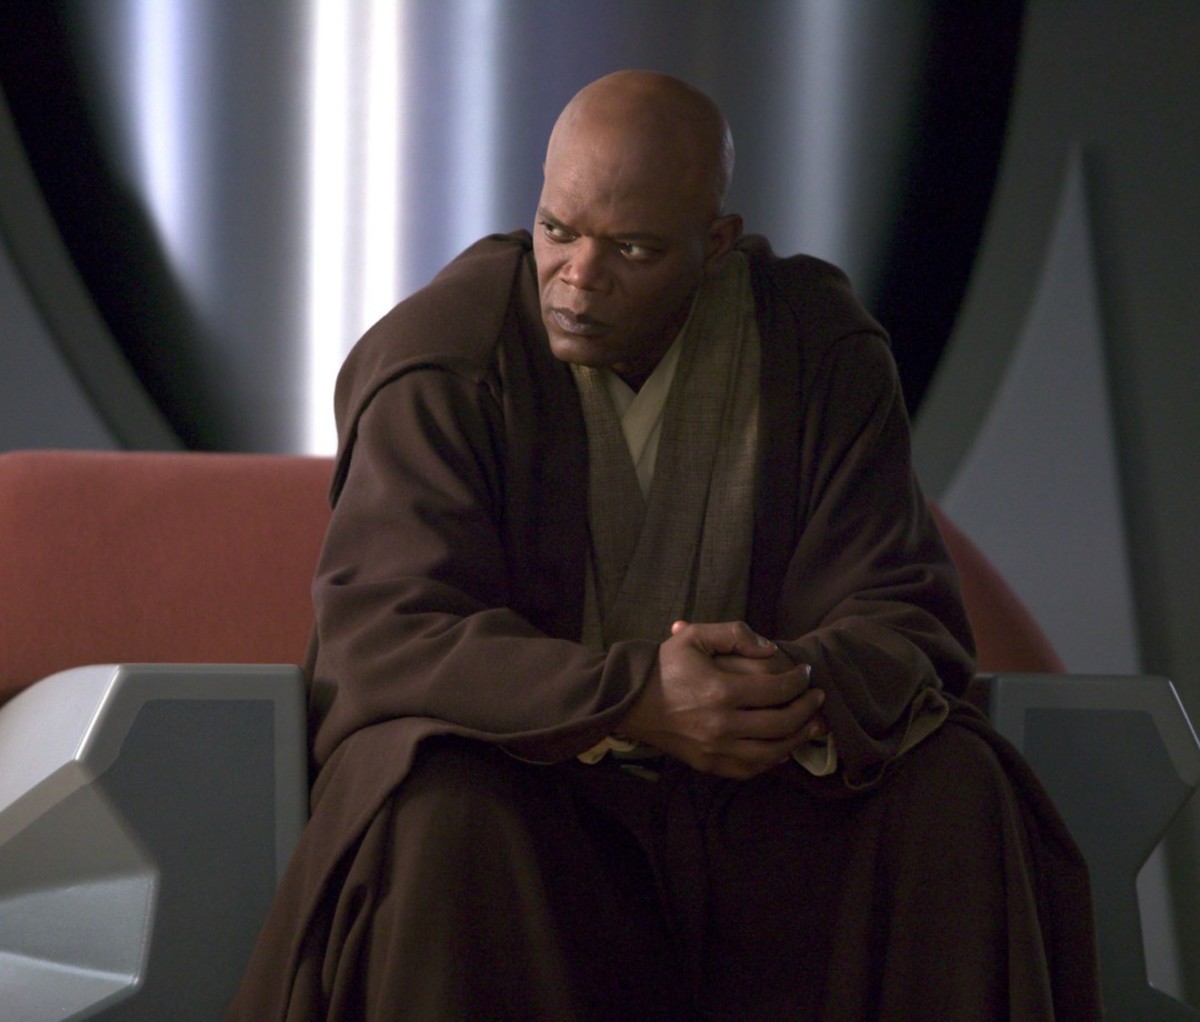 Samuel L. Jackson in Star Wars Episode III - Revenge Of The Sith - 2005